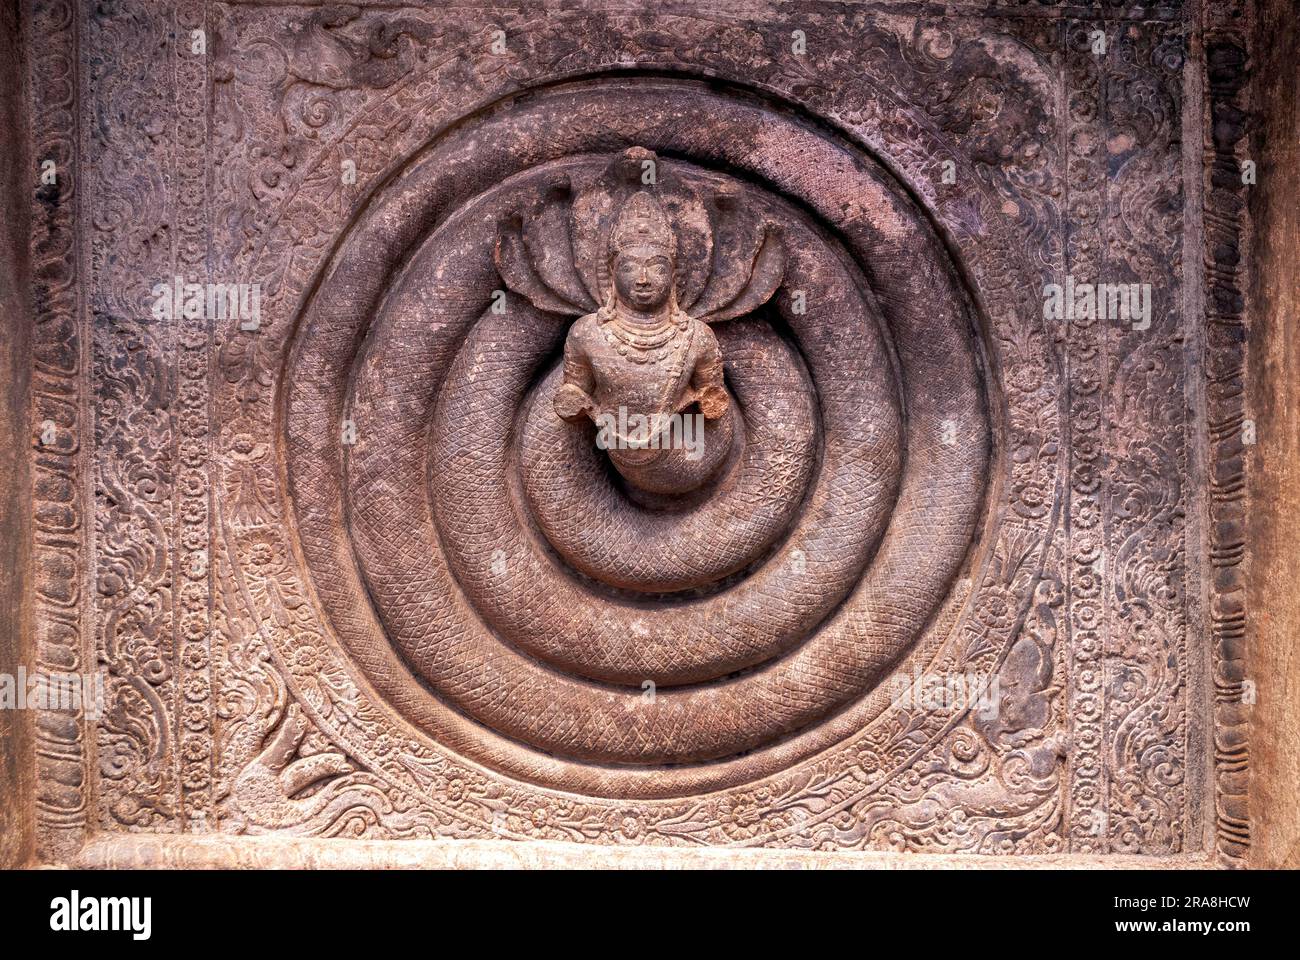 Serpent enroulé, sculpture au plafond dans la grotte 1, Badami, karnataka, Inde du Sud, Inde, Asie Banque D'Images